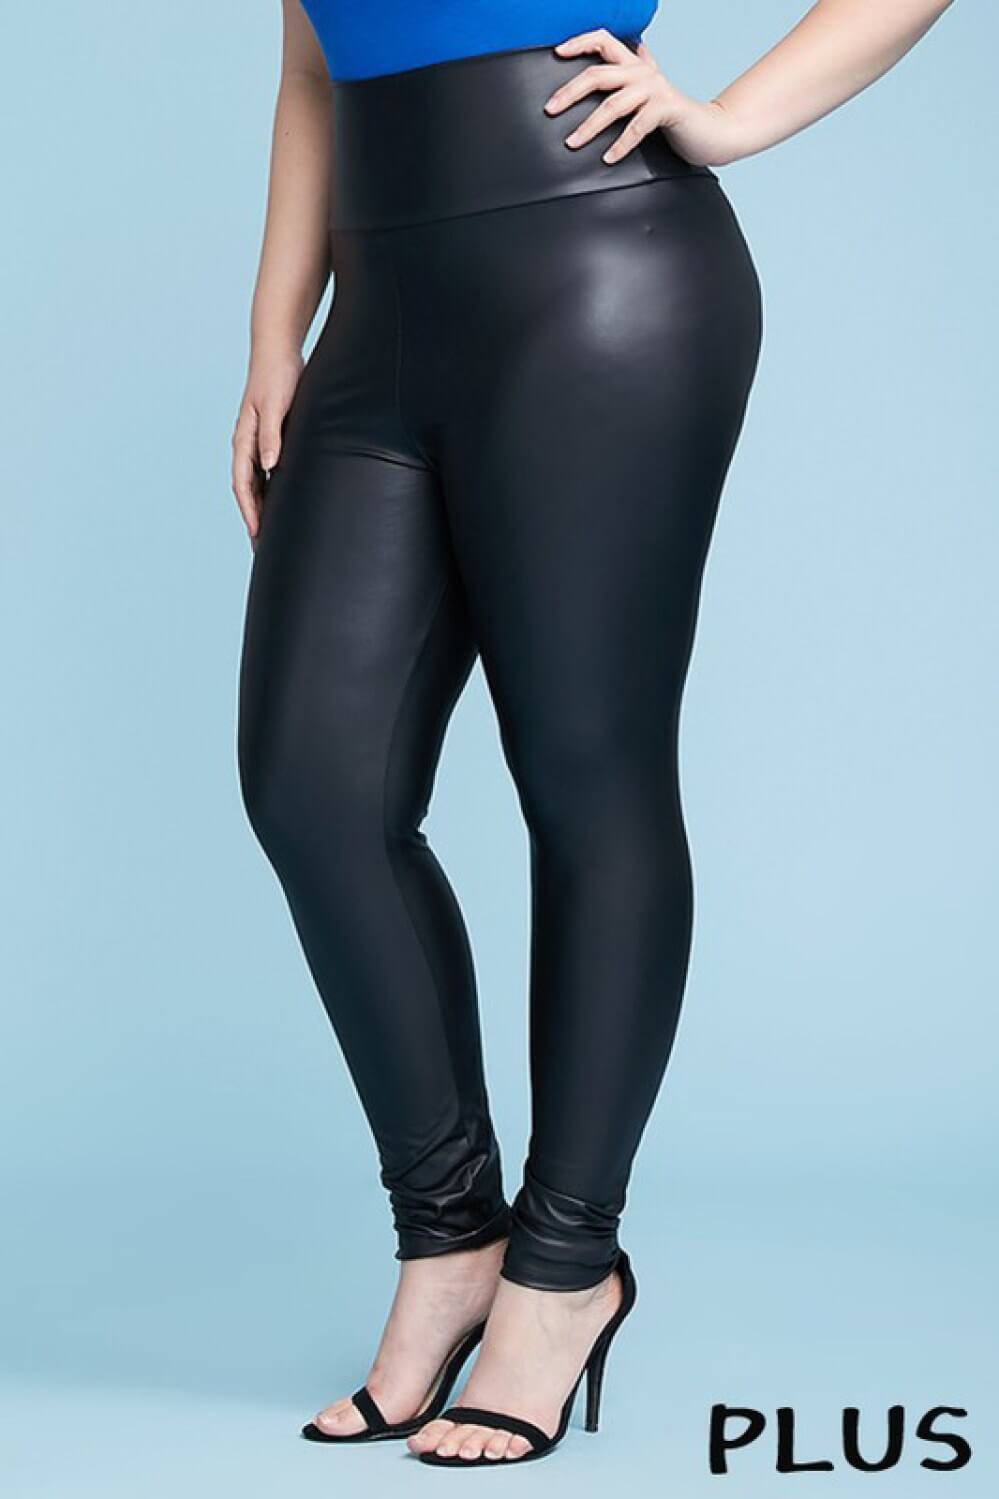 Ladies Plus Size Black Faux Leather Shiny Leggings